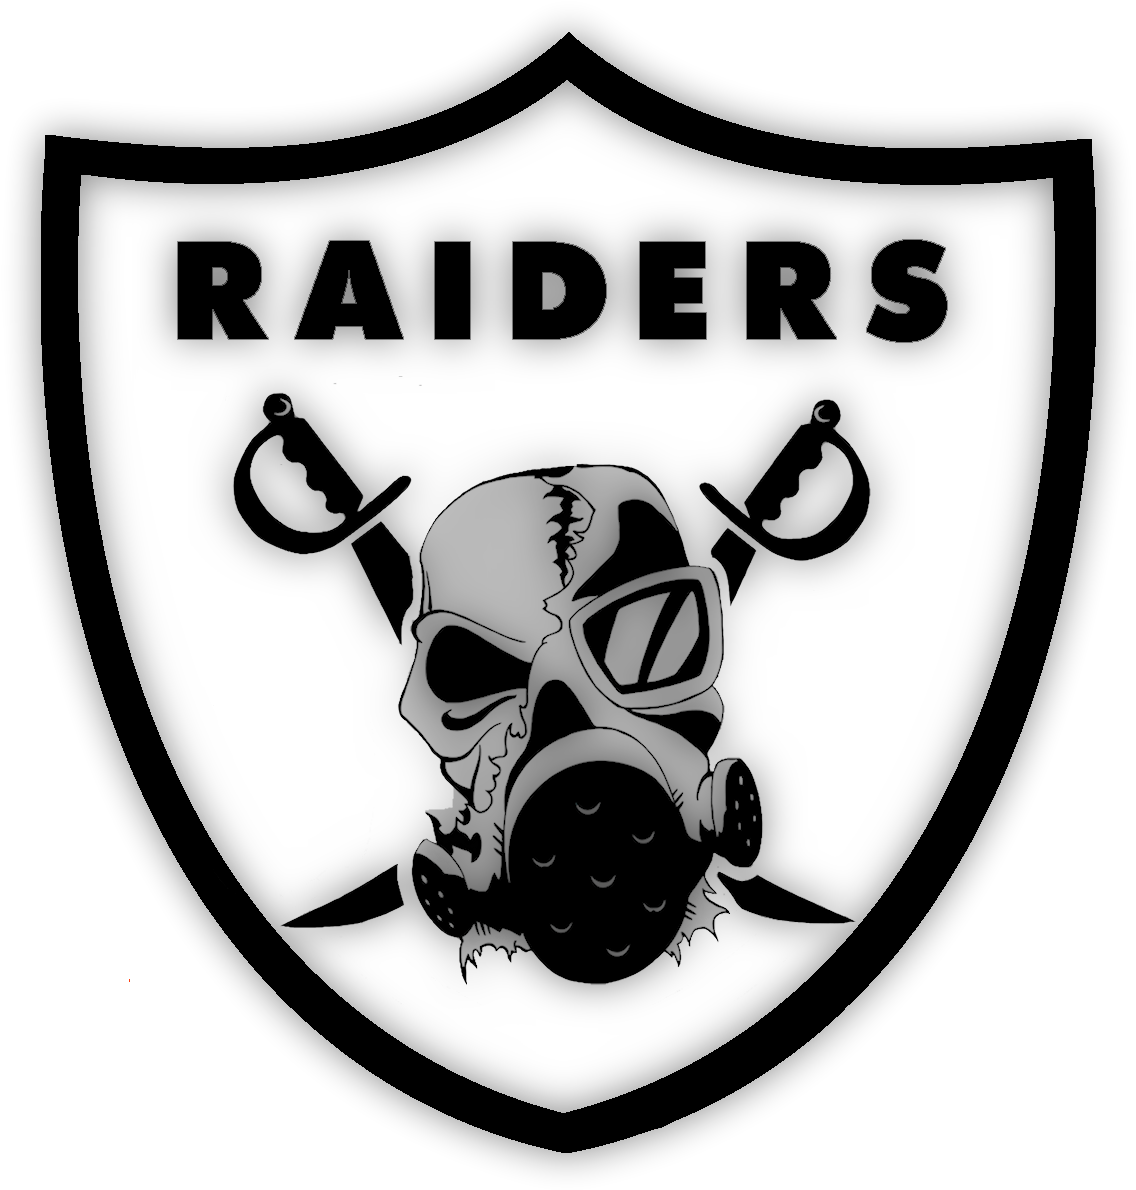 Download Oakland Raiders Logo - Oakland Raiders Animated Gif PNG Image ...